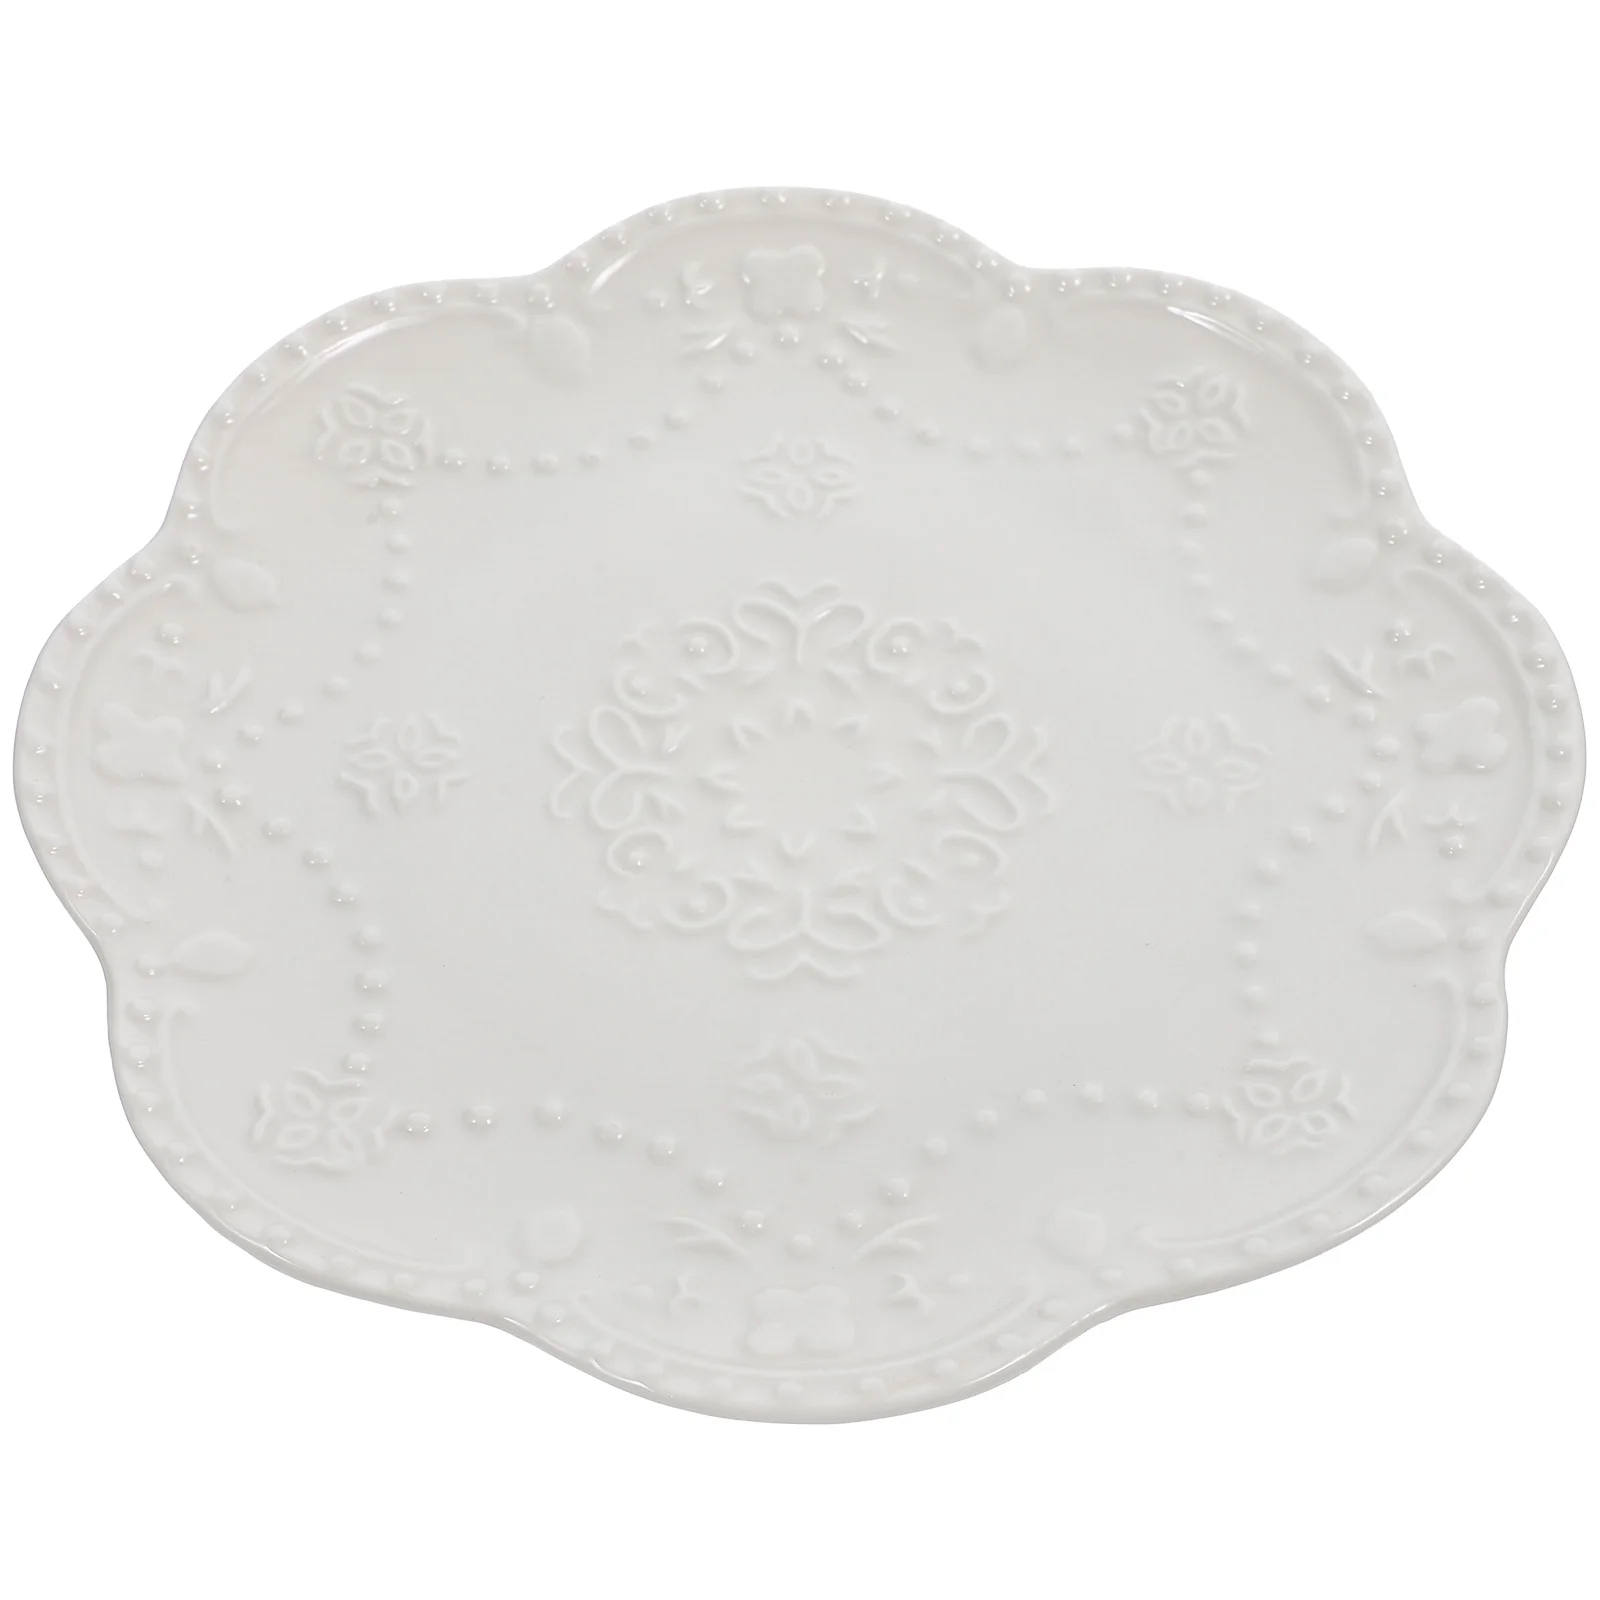 

Decorative Reusable Household Delicate Dessert Plate Serving Plate Dinner Accessory Ceramic Plate for Daily Restaurant